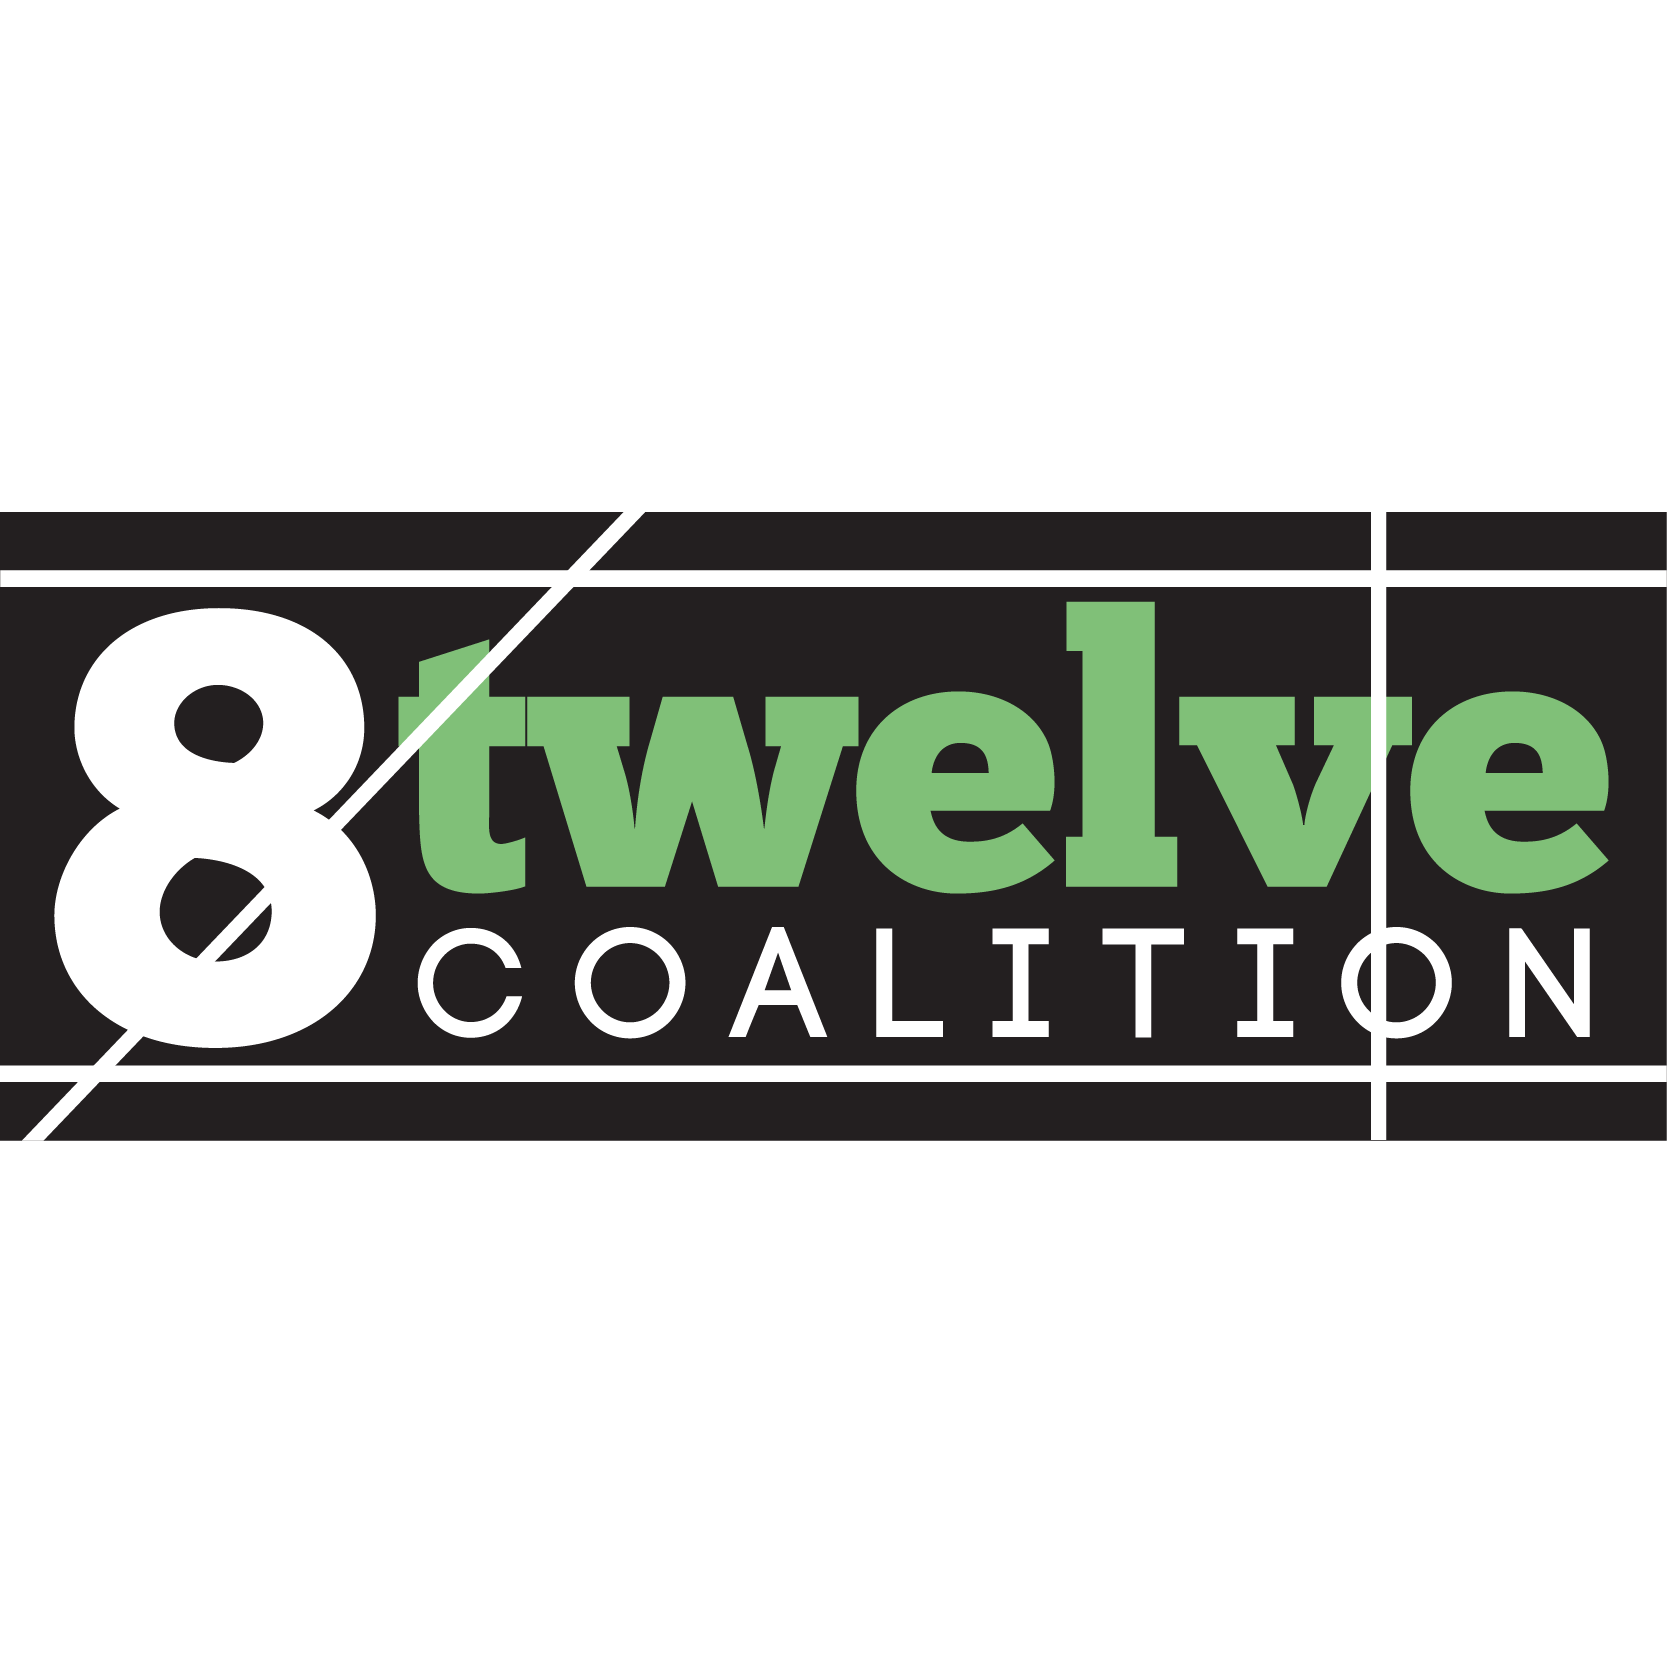 The 8twelve Coalition of Muncie, Indiana